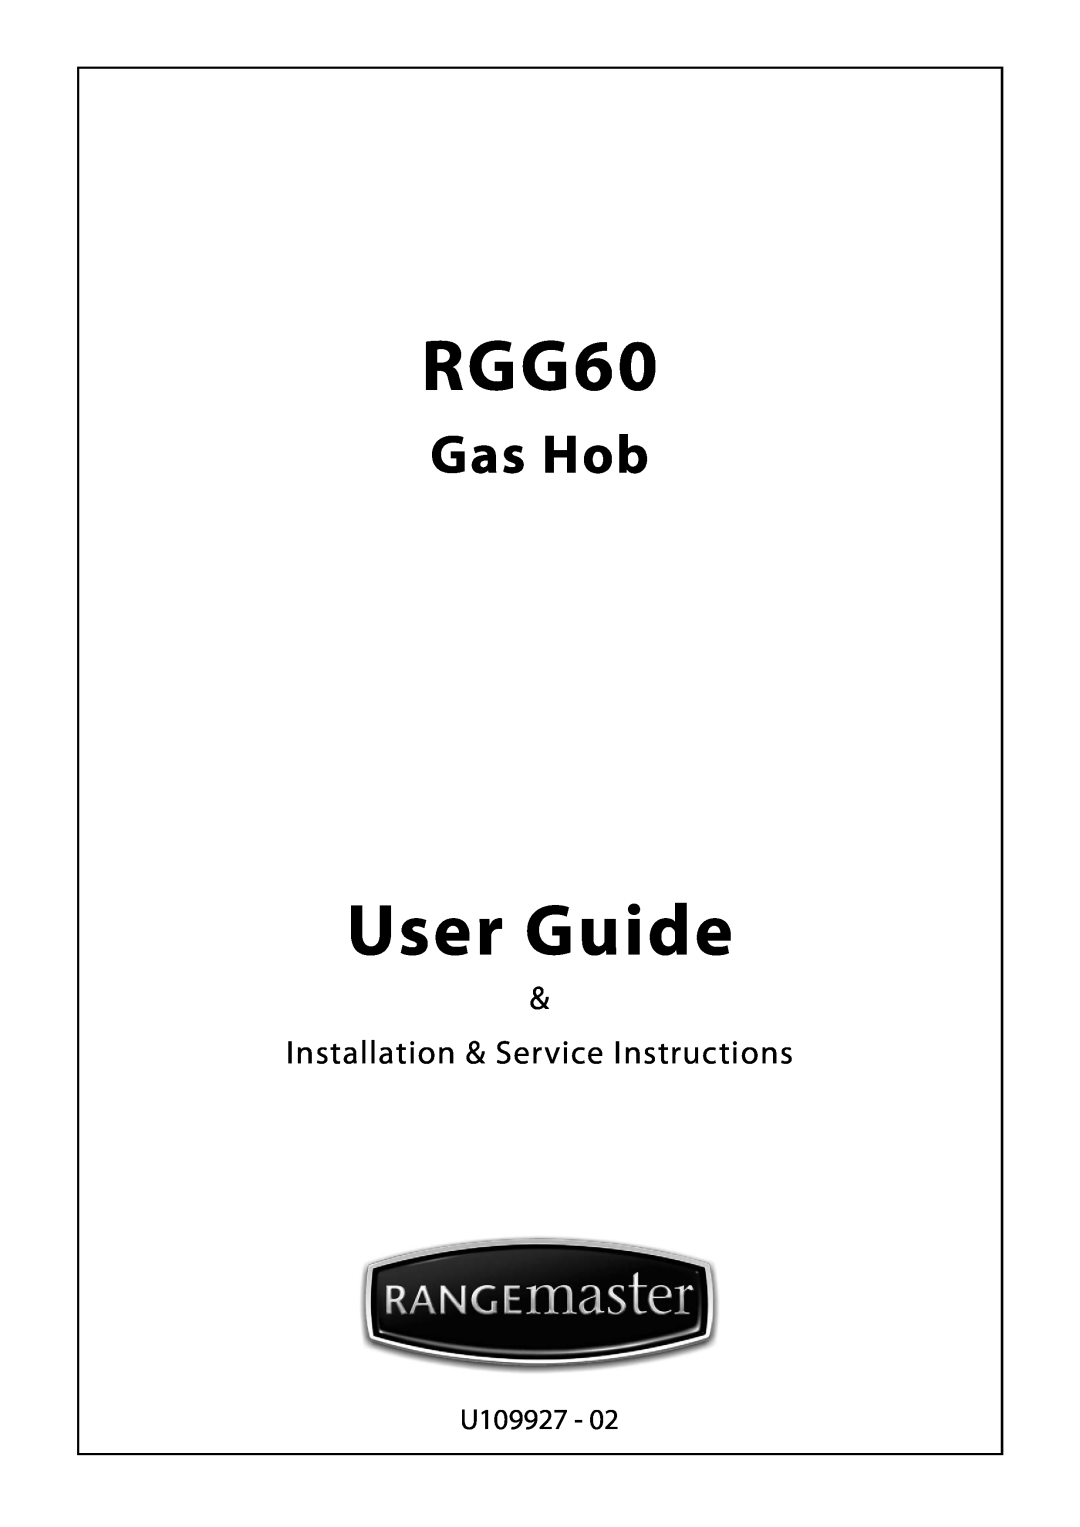 Rangemaster RGG60 manual User Guide, Gas Hob, Installation & Service Instructions, U109927 